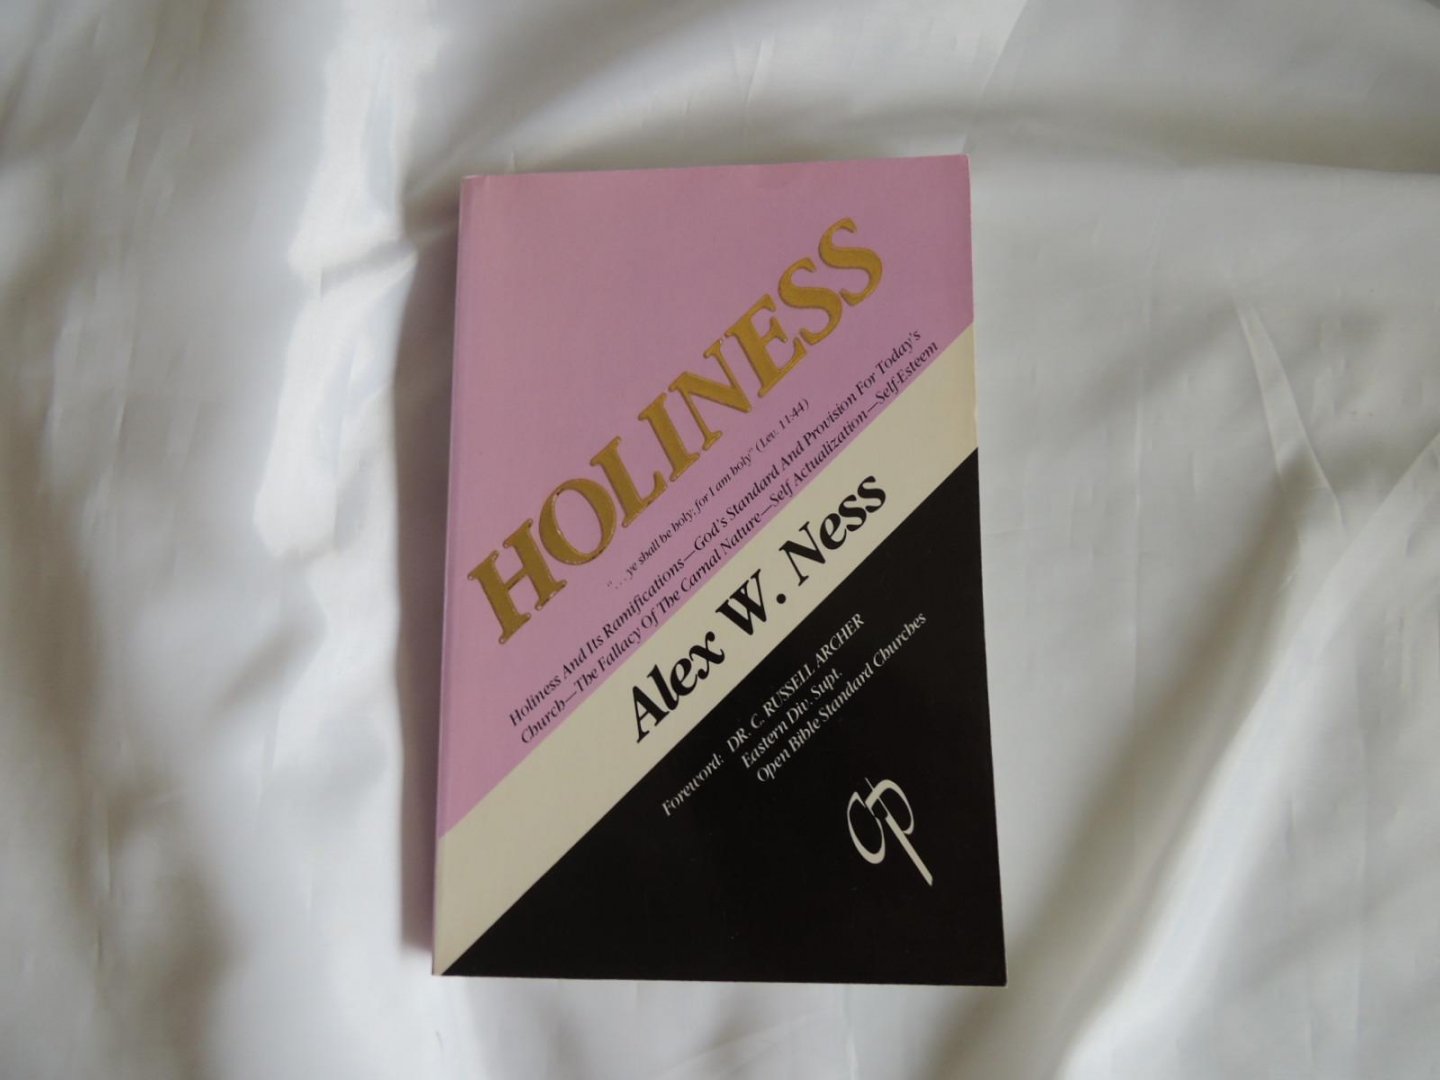 NESS Alex W. - Holiness - Pioneering